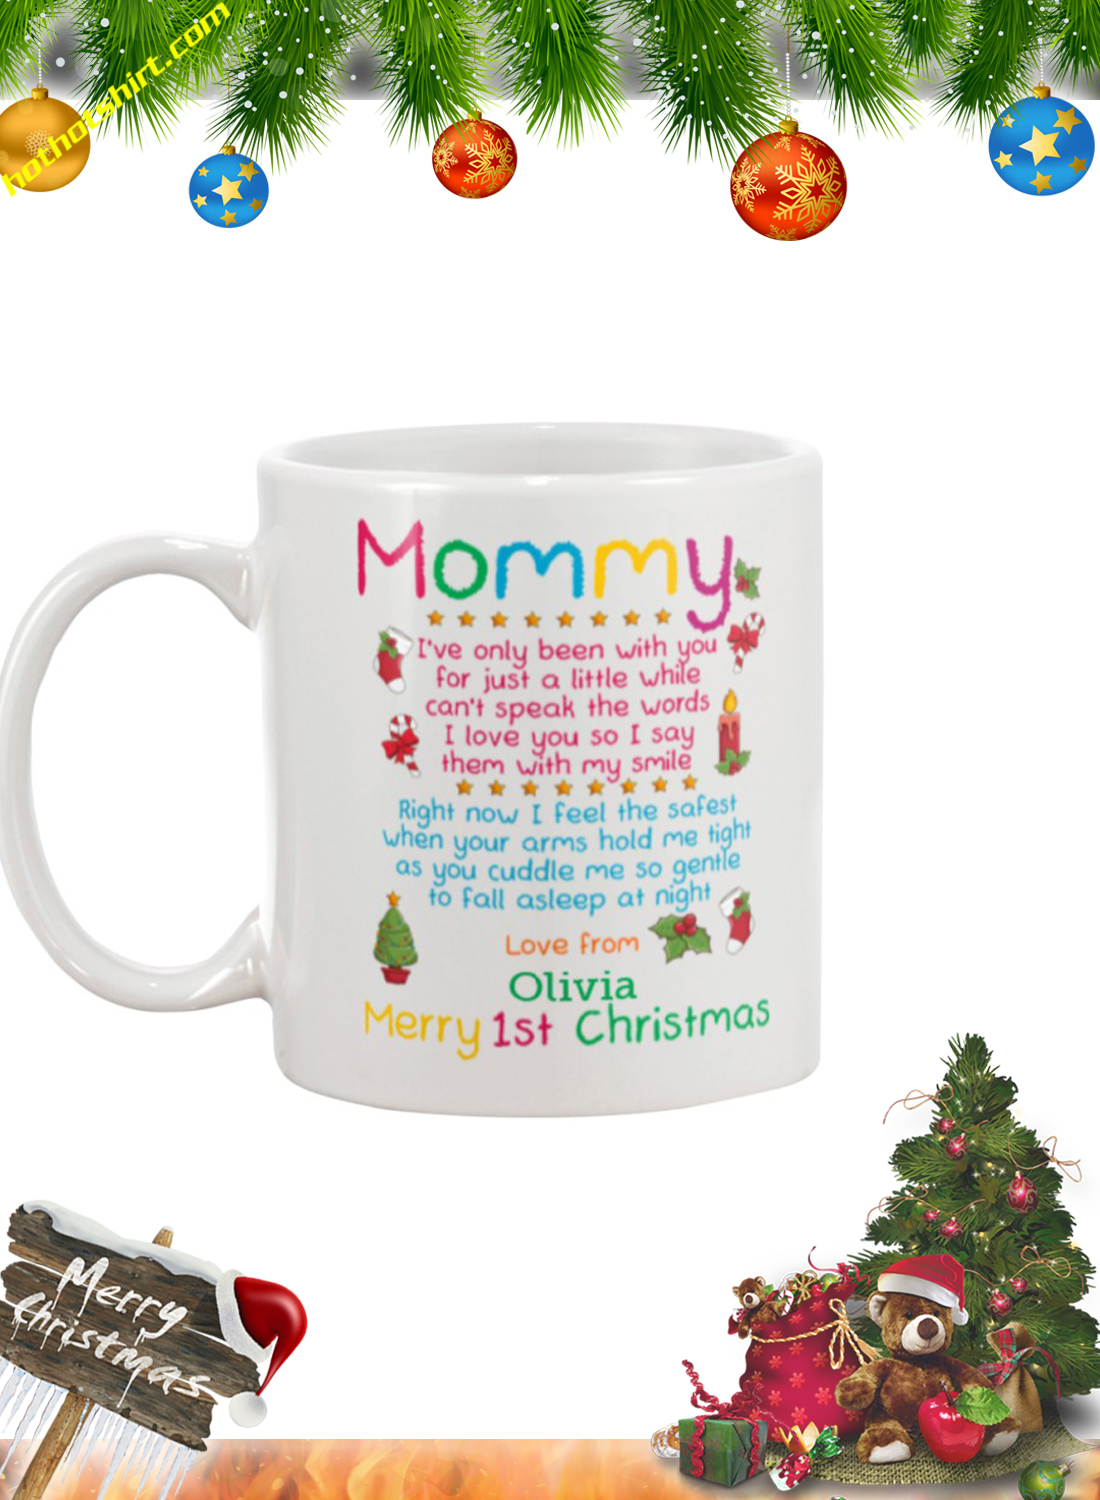 Mommy merry 1st christmas personalized custom name mug